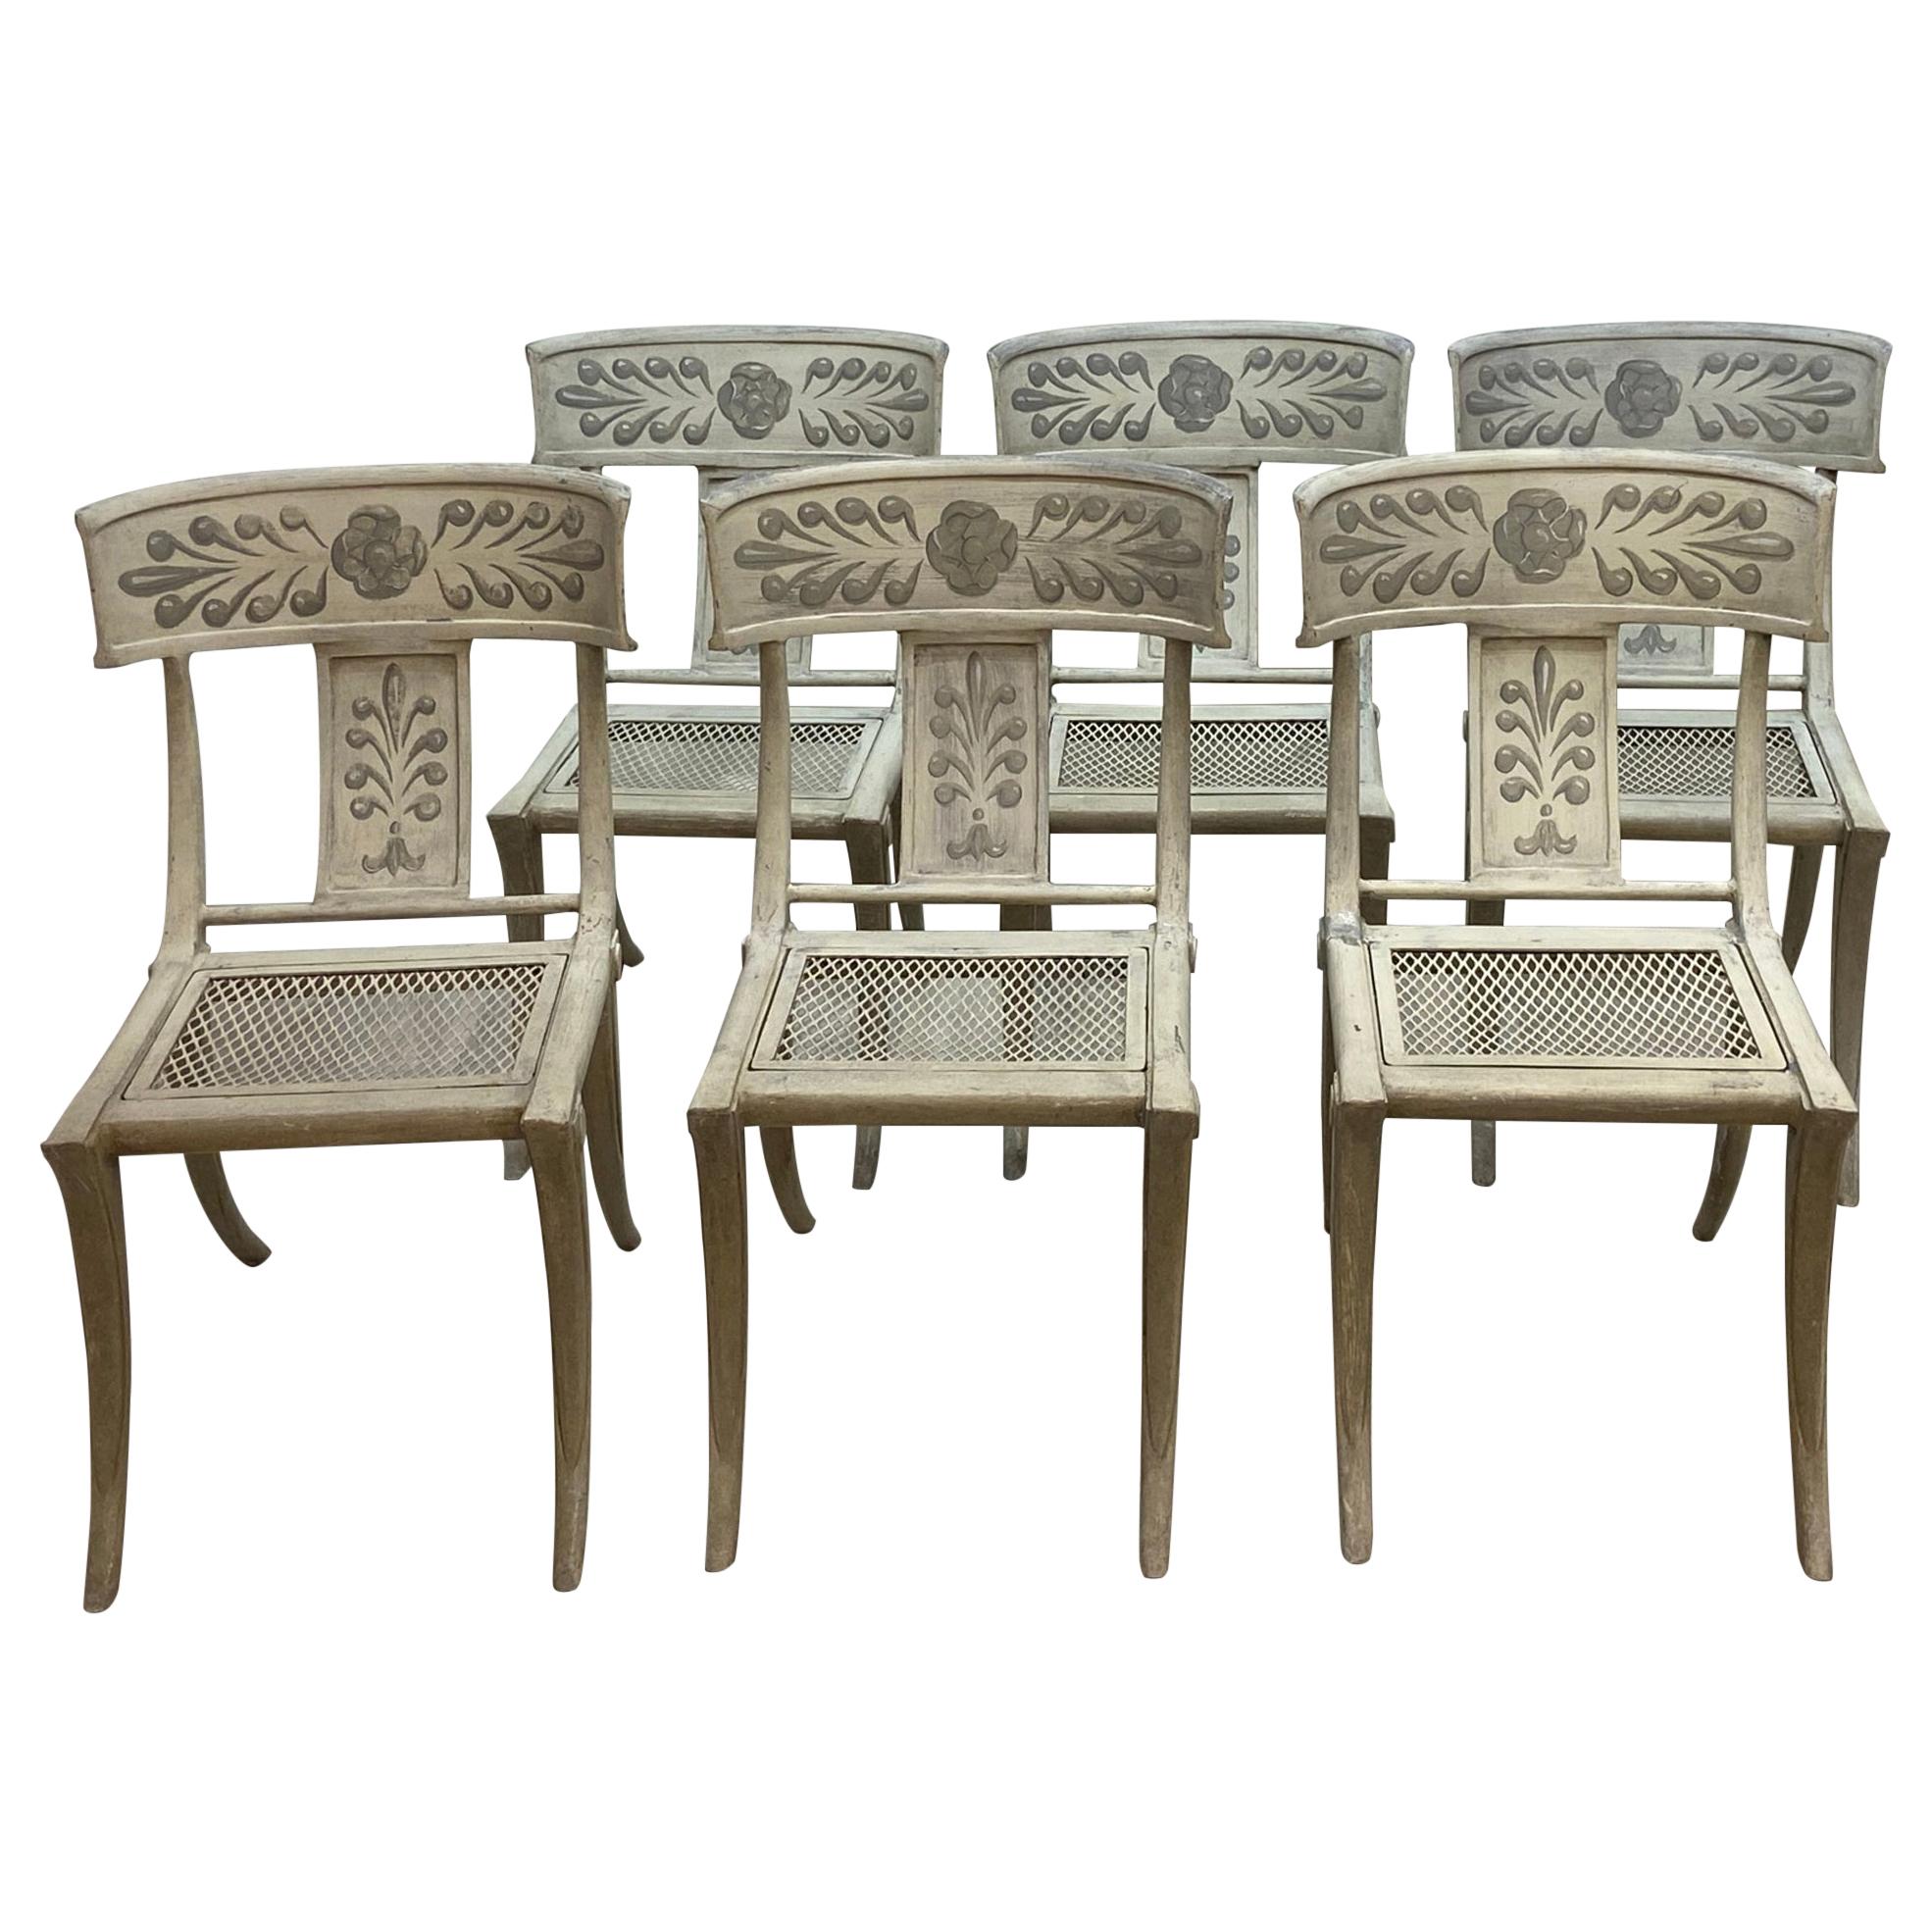 6 Rare Swedish Neoclassical Painted Metal Klismos Dining Chairs